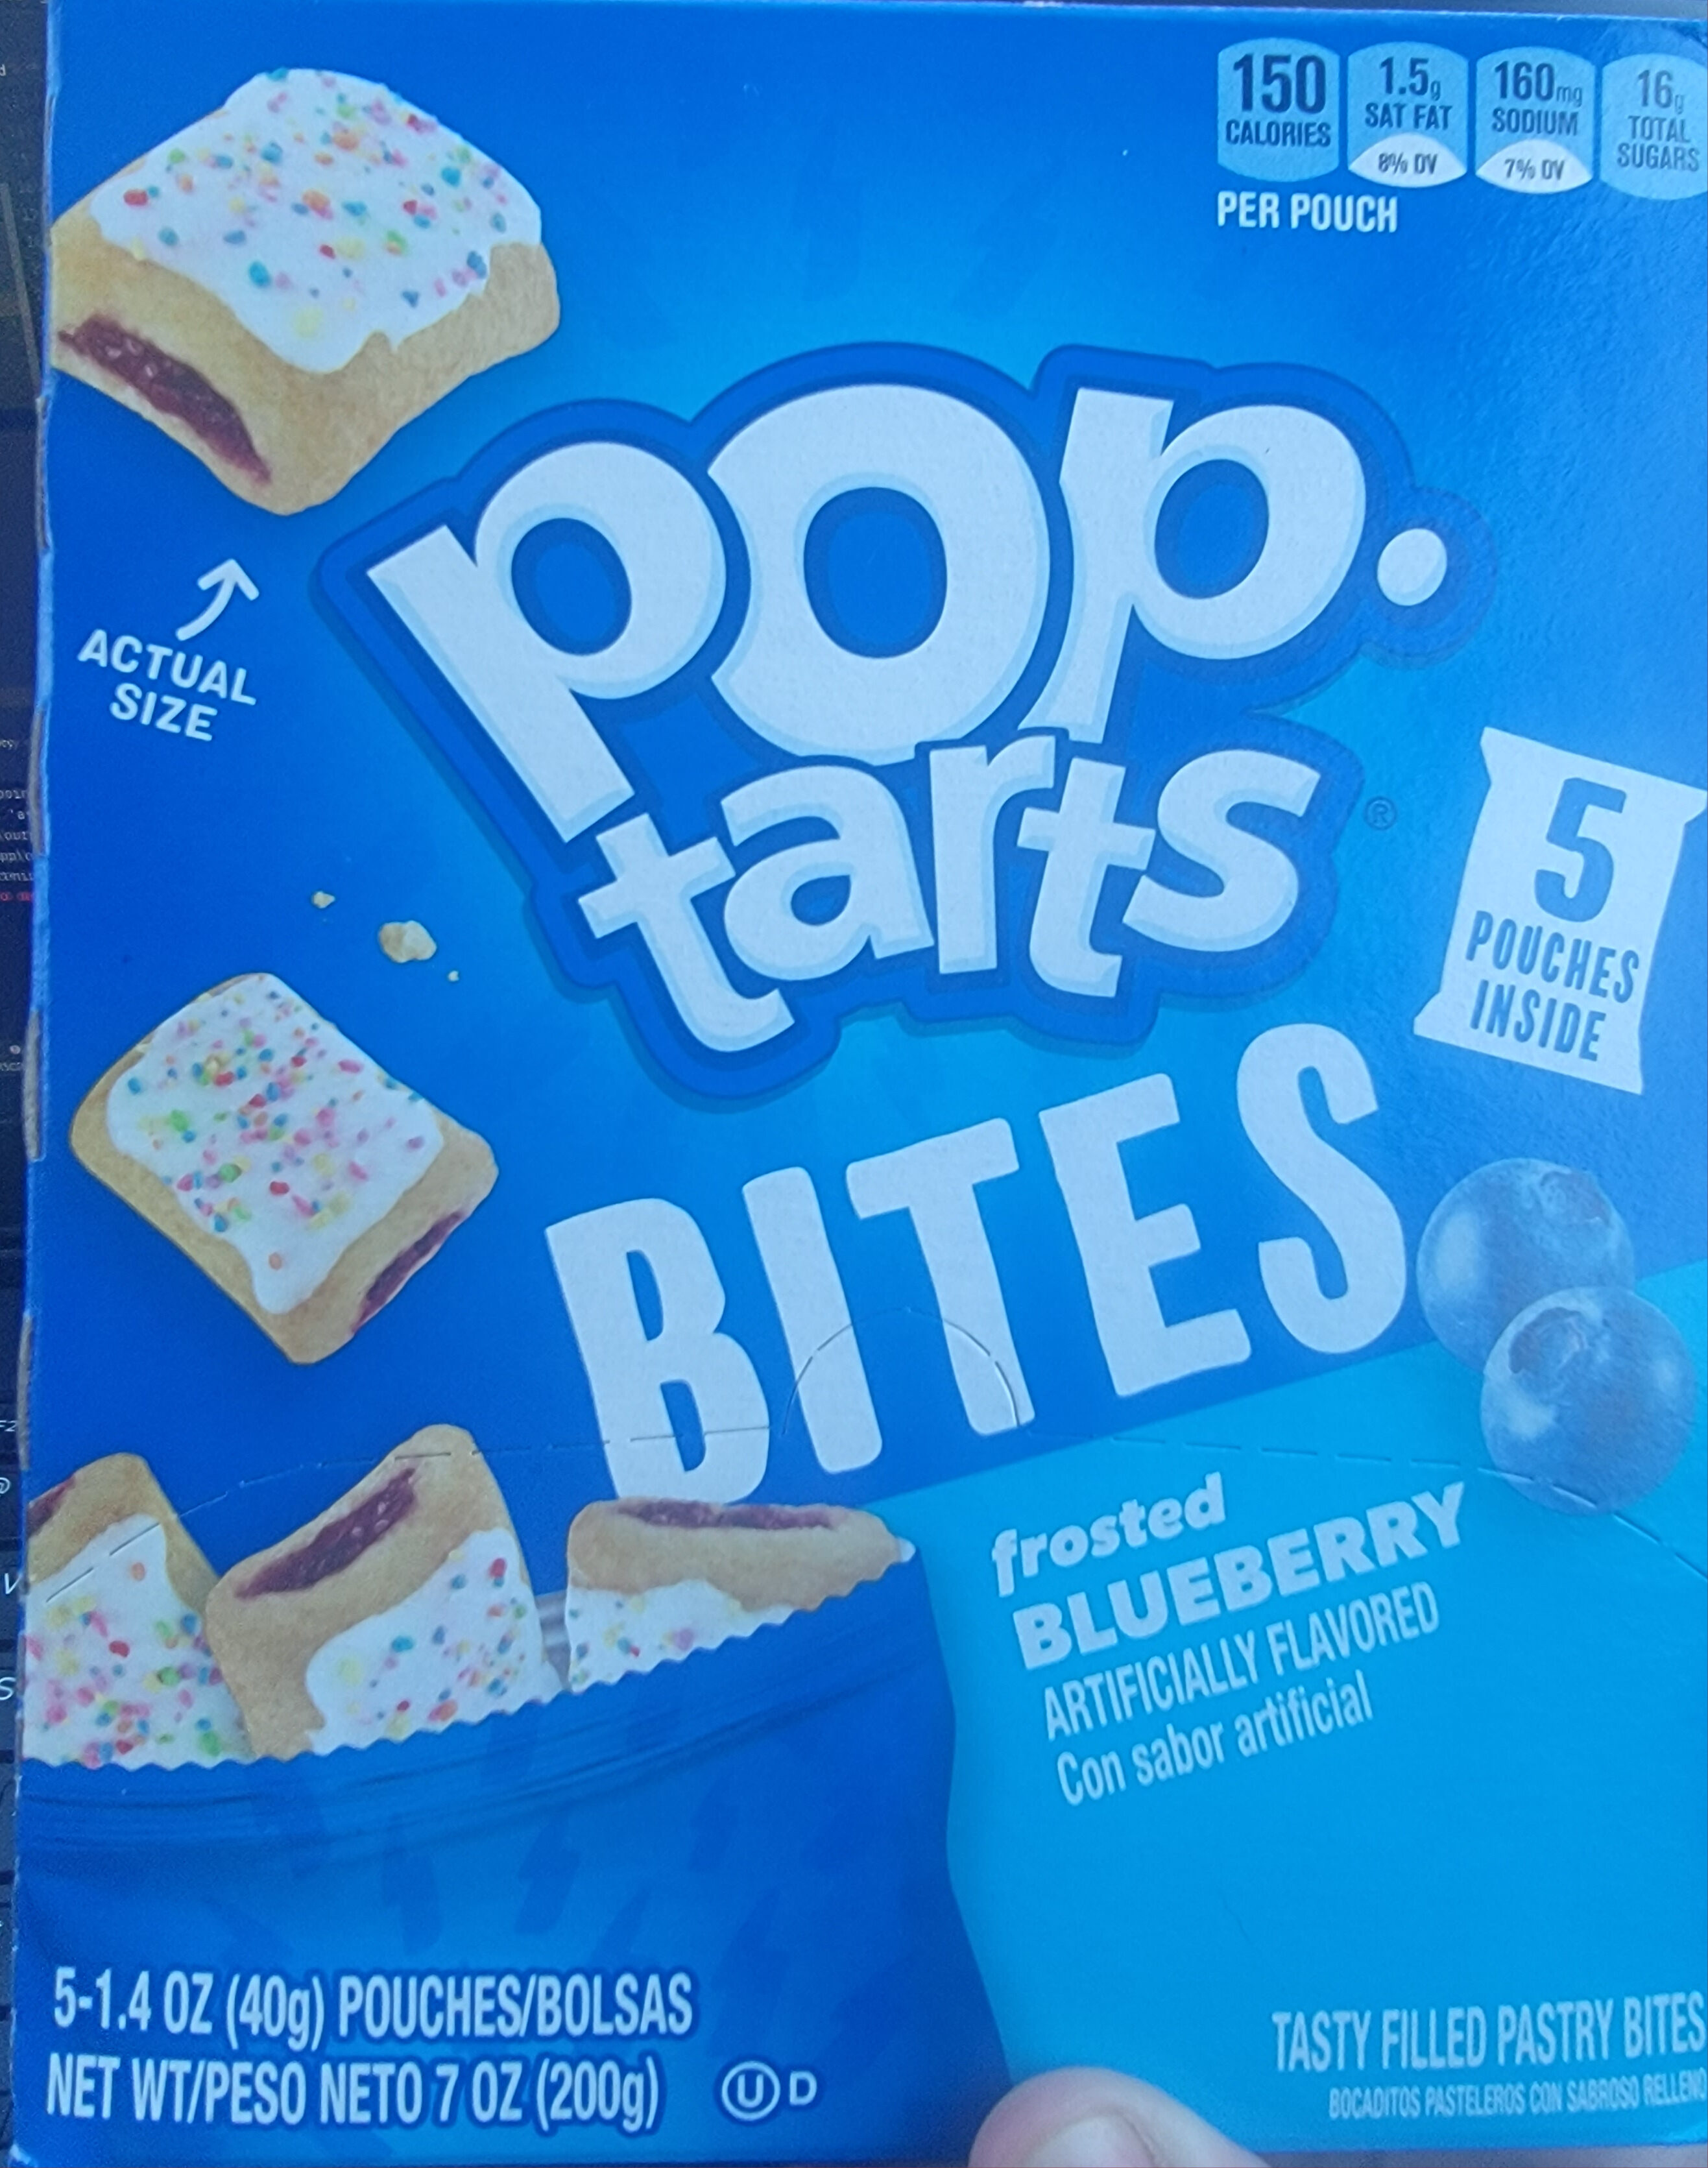 pop-tarts bites frosted blueberry - Product - en